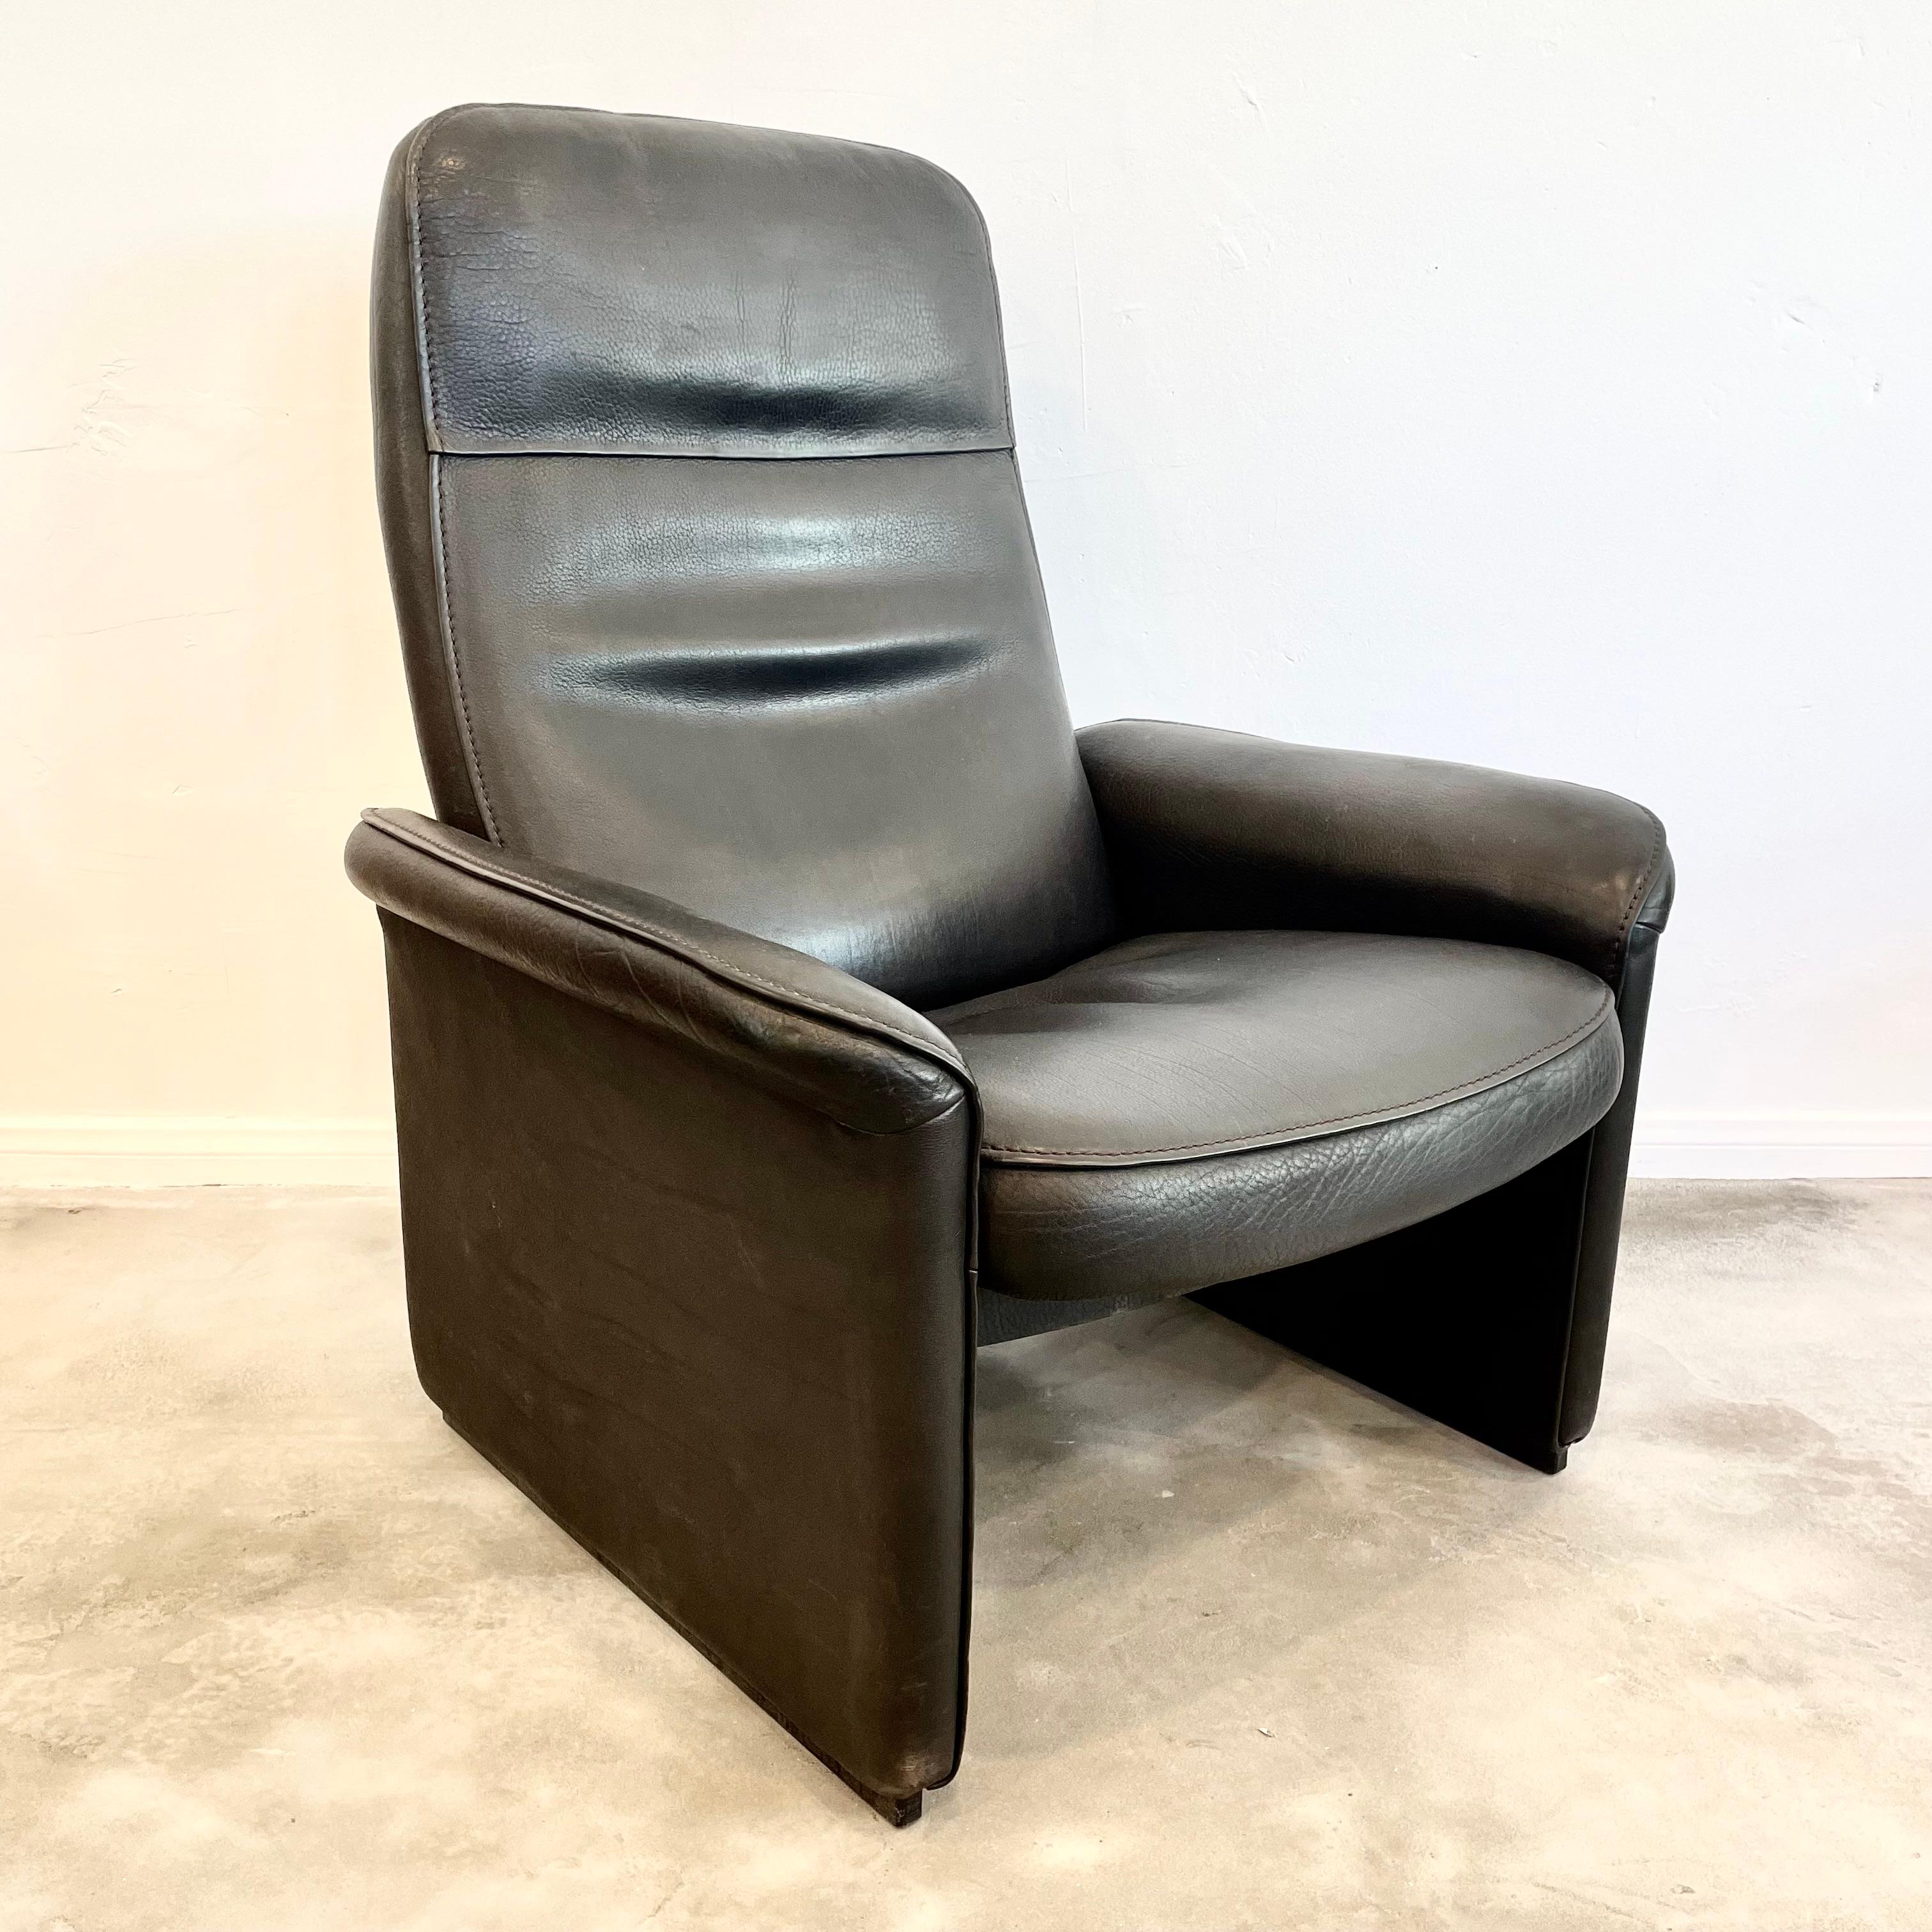 Swiss De Sede DS-50 Black Leather Recliner Chair, 1970s Switzerland For Sale